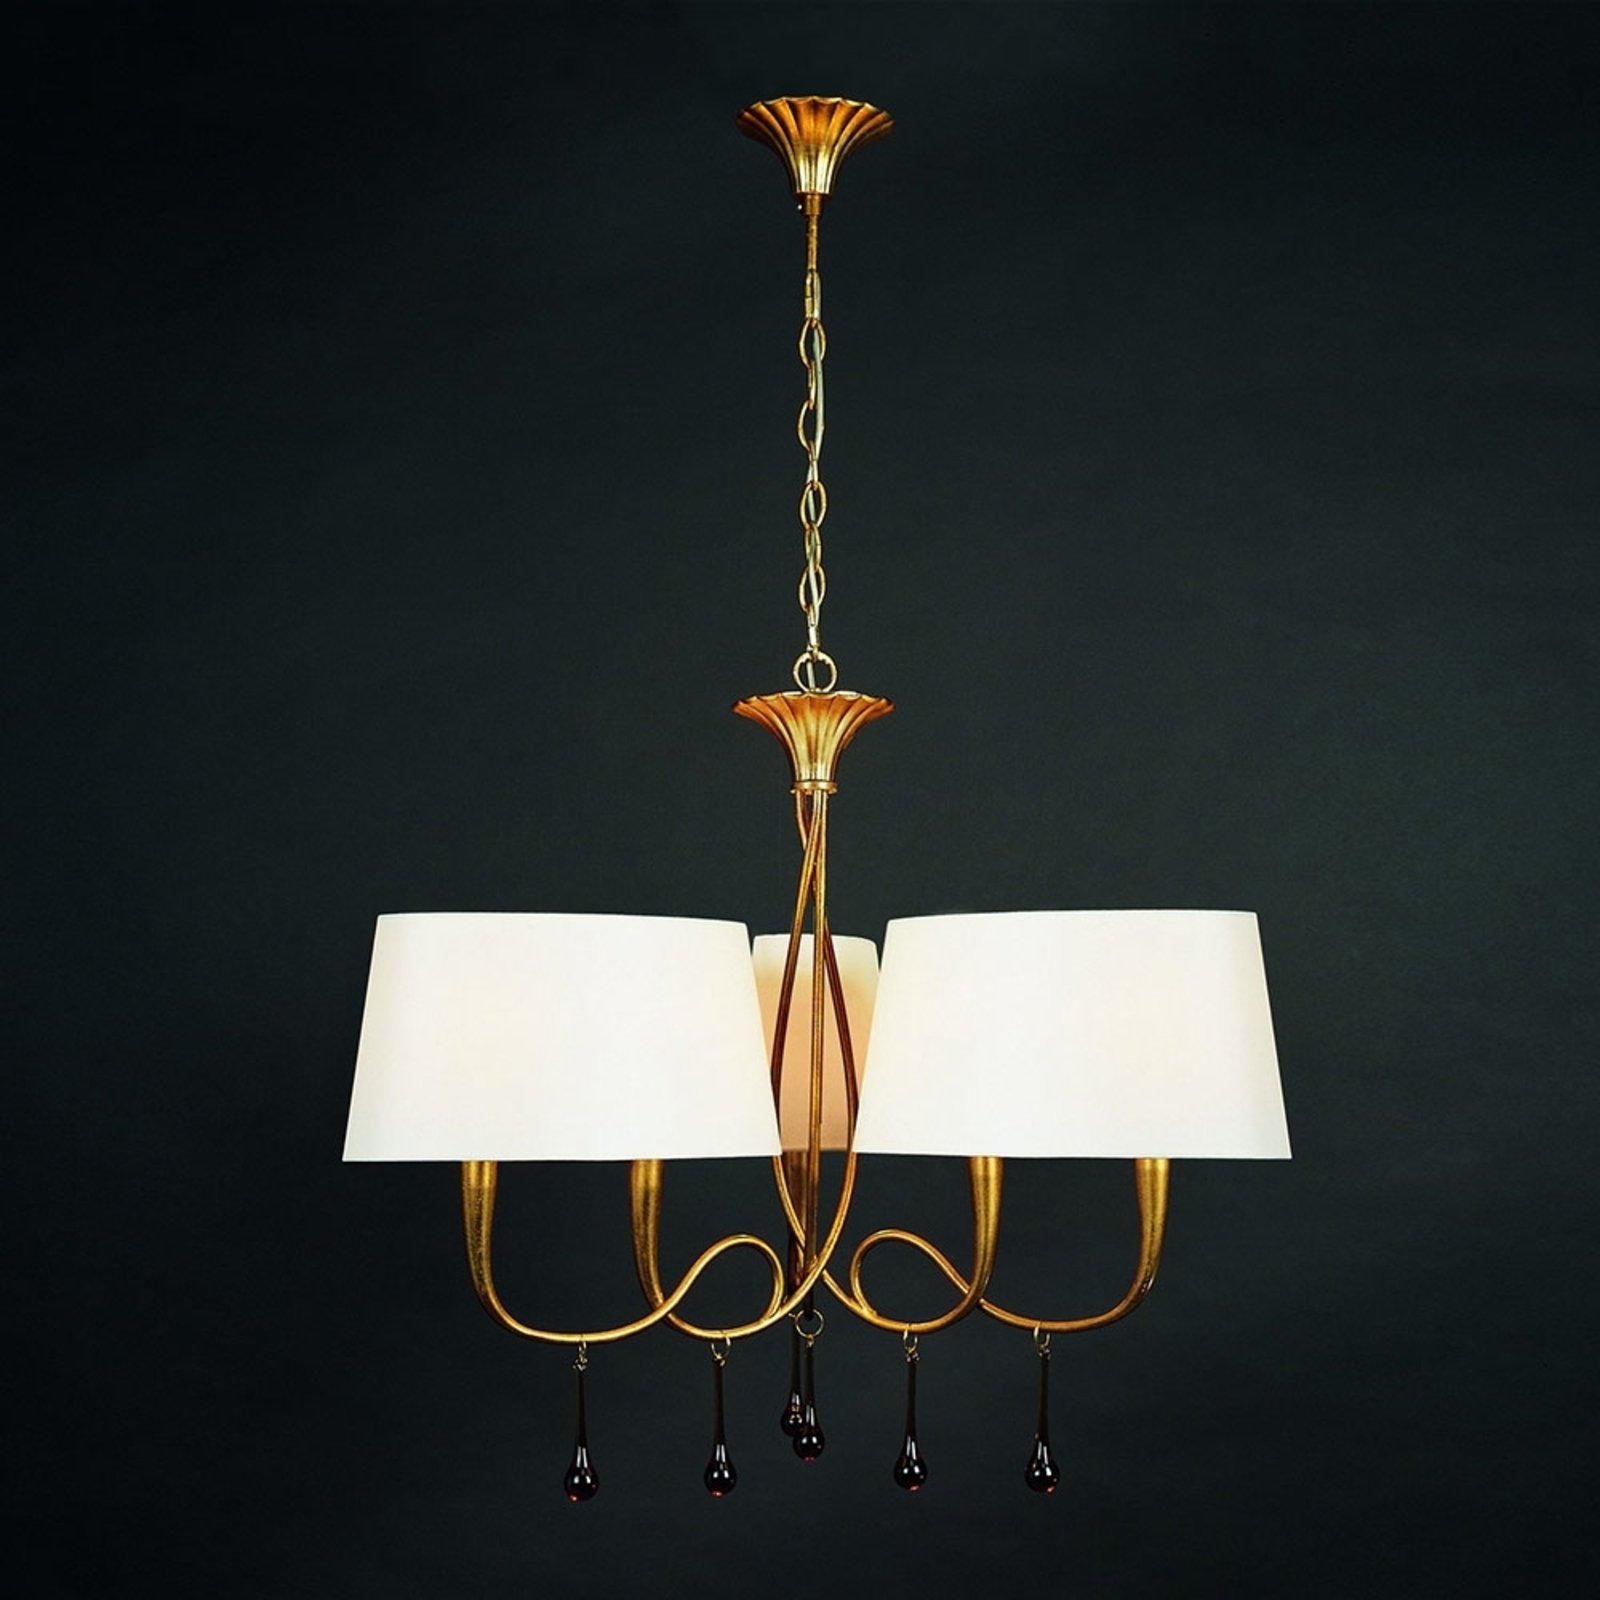 Hanglamp Paola 6-lamps goud w. textielen kappen